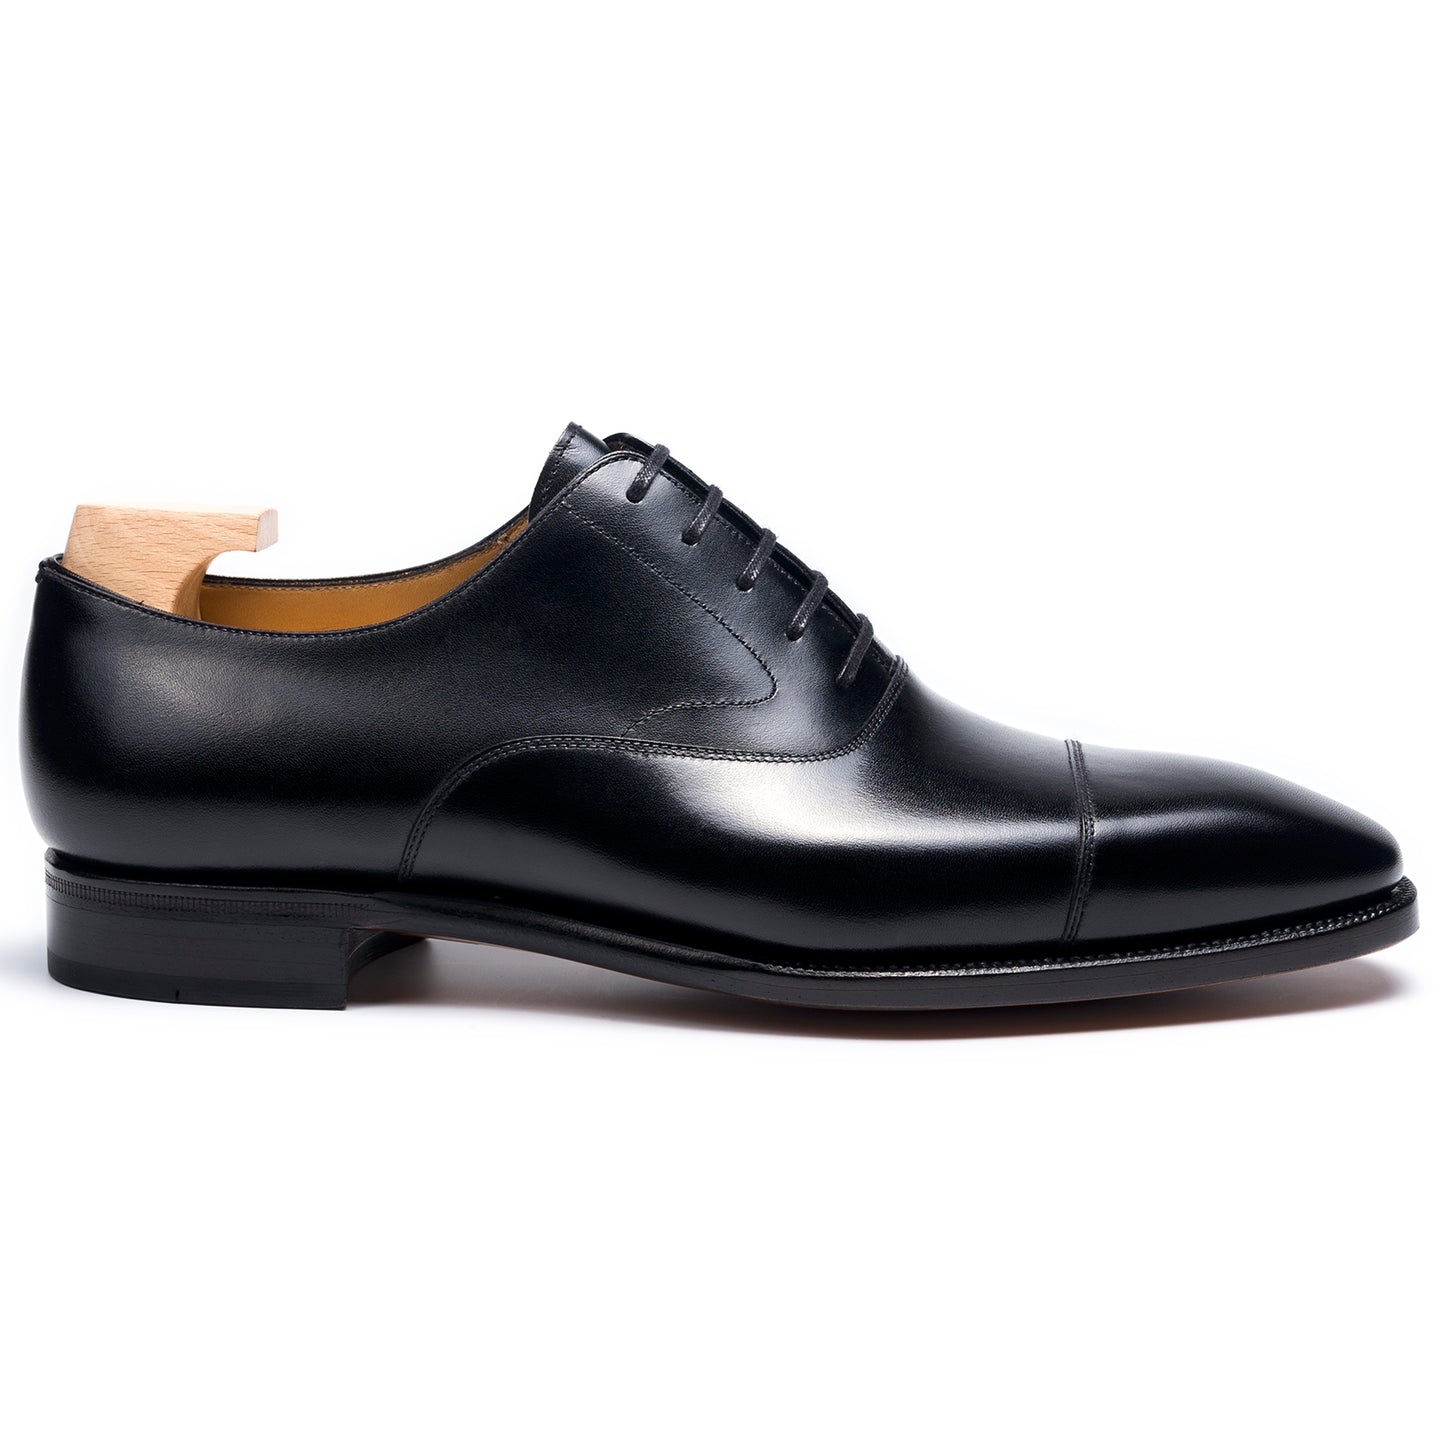 TLB Mallorca leather shoes 198 / VAN GOGH / BOXCALF BLACK